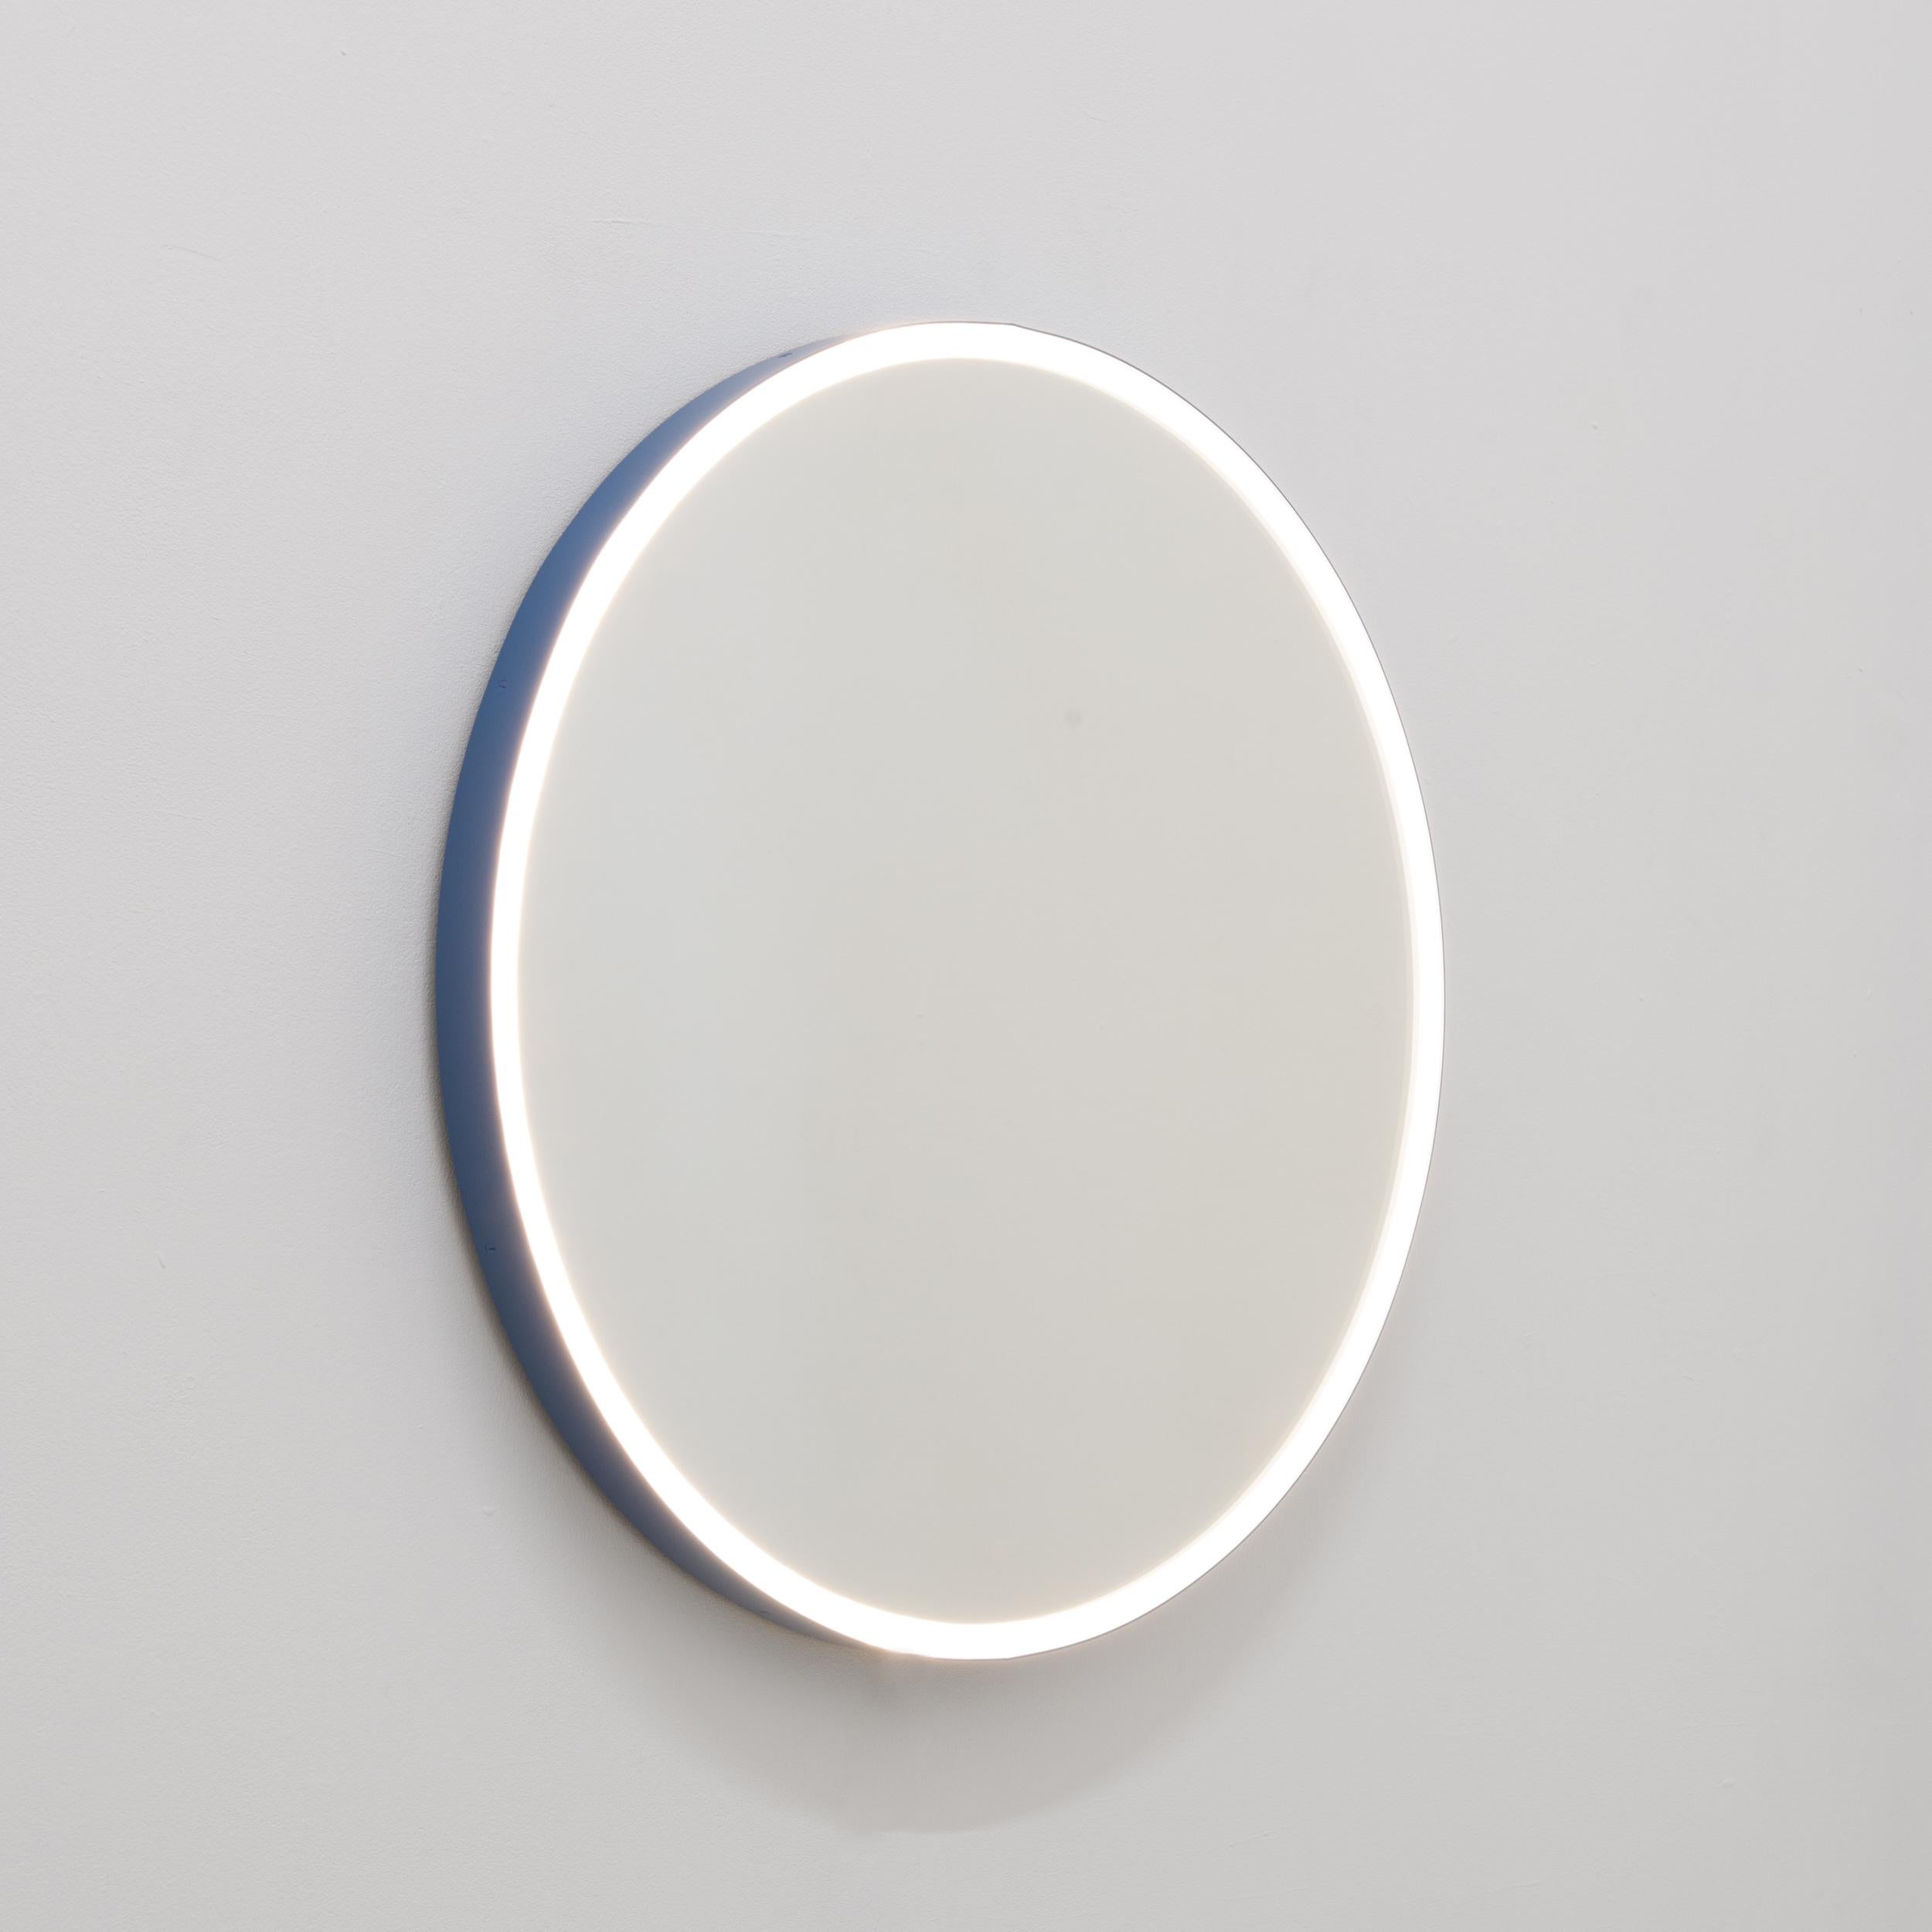 Britannique Orbis Front Illuminated Circular Modern Contemporary Mirror with Blue Frame, XL (miroir circulaire contemporain éclairé par l'avant avec cadre bleu) en vente